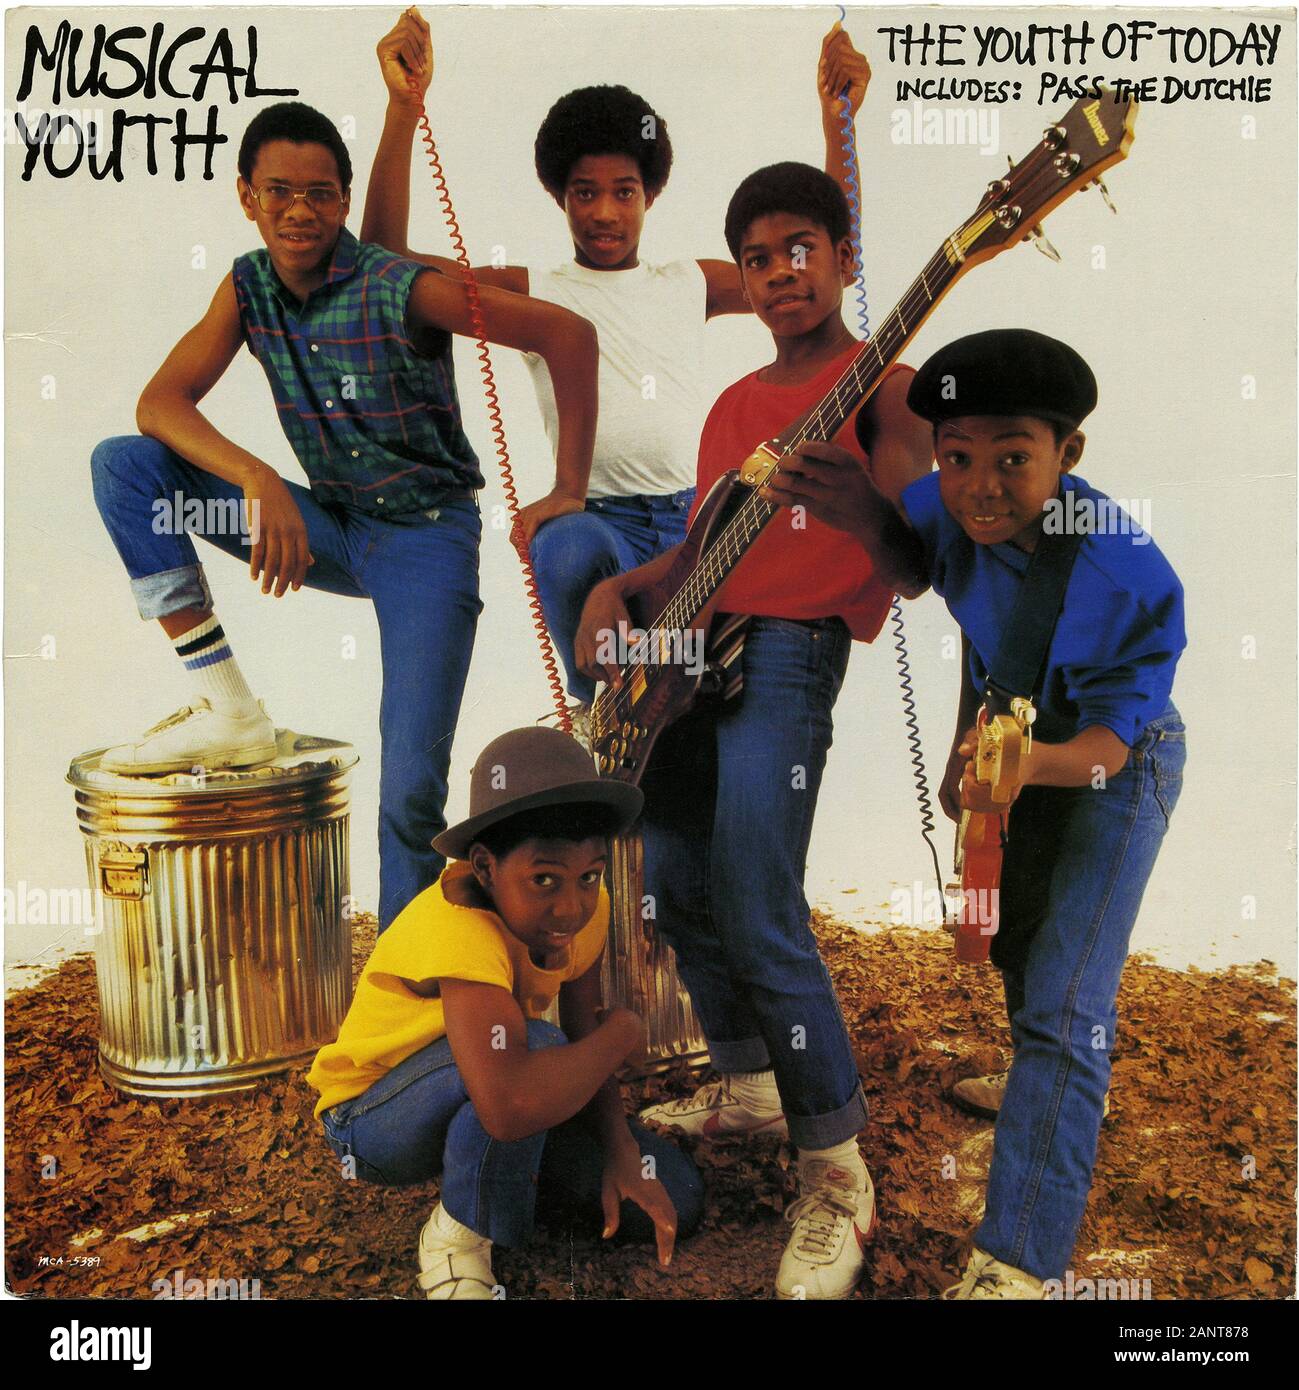 The Youth Of Today  - Classic vintage vinyl album Stock Photo